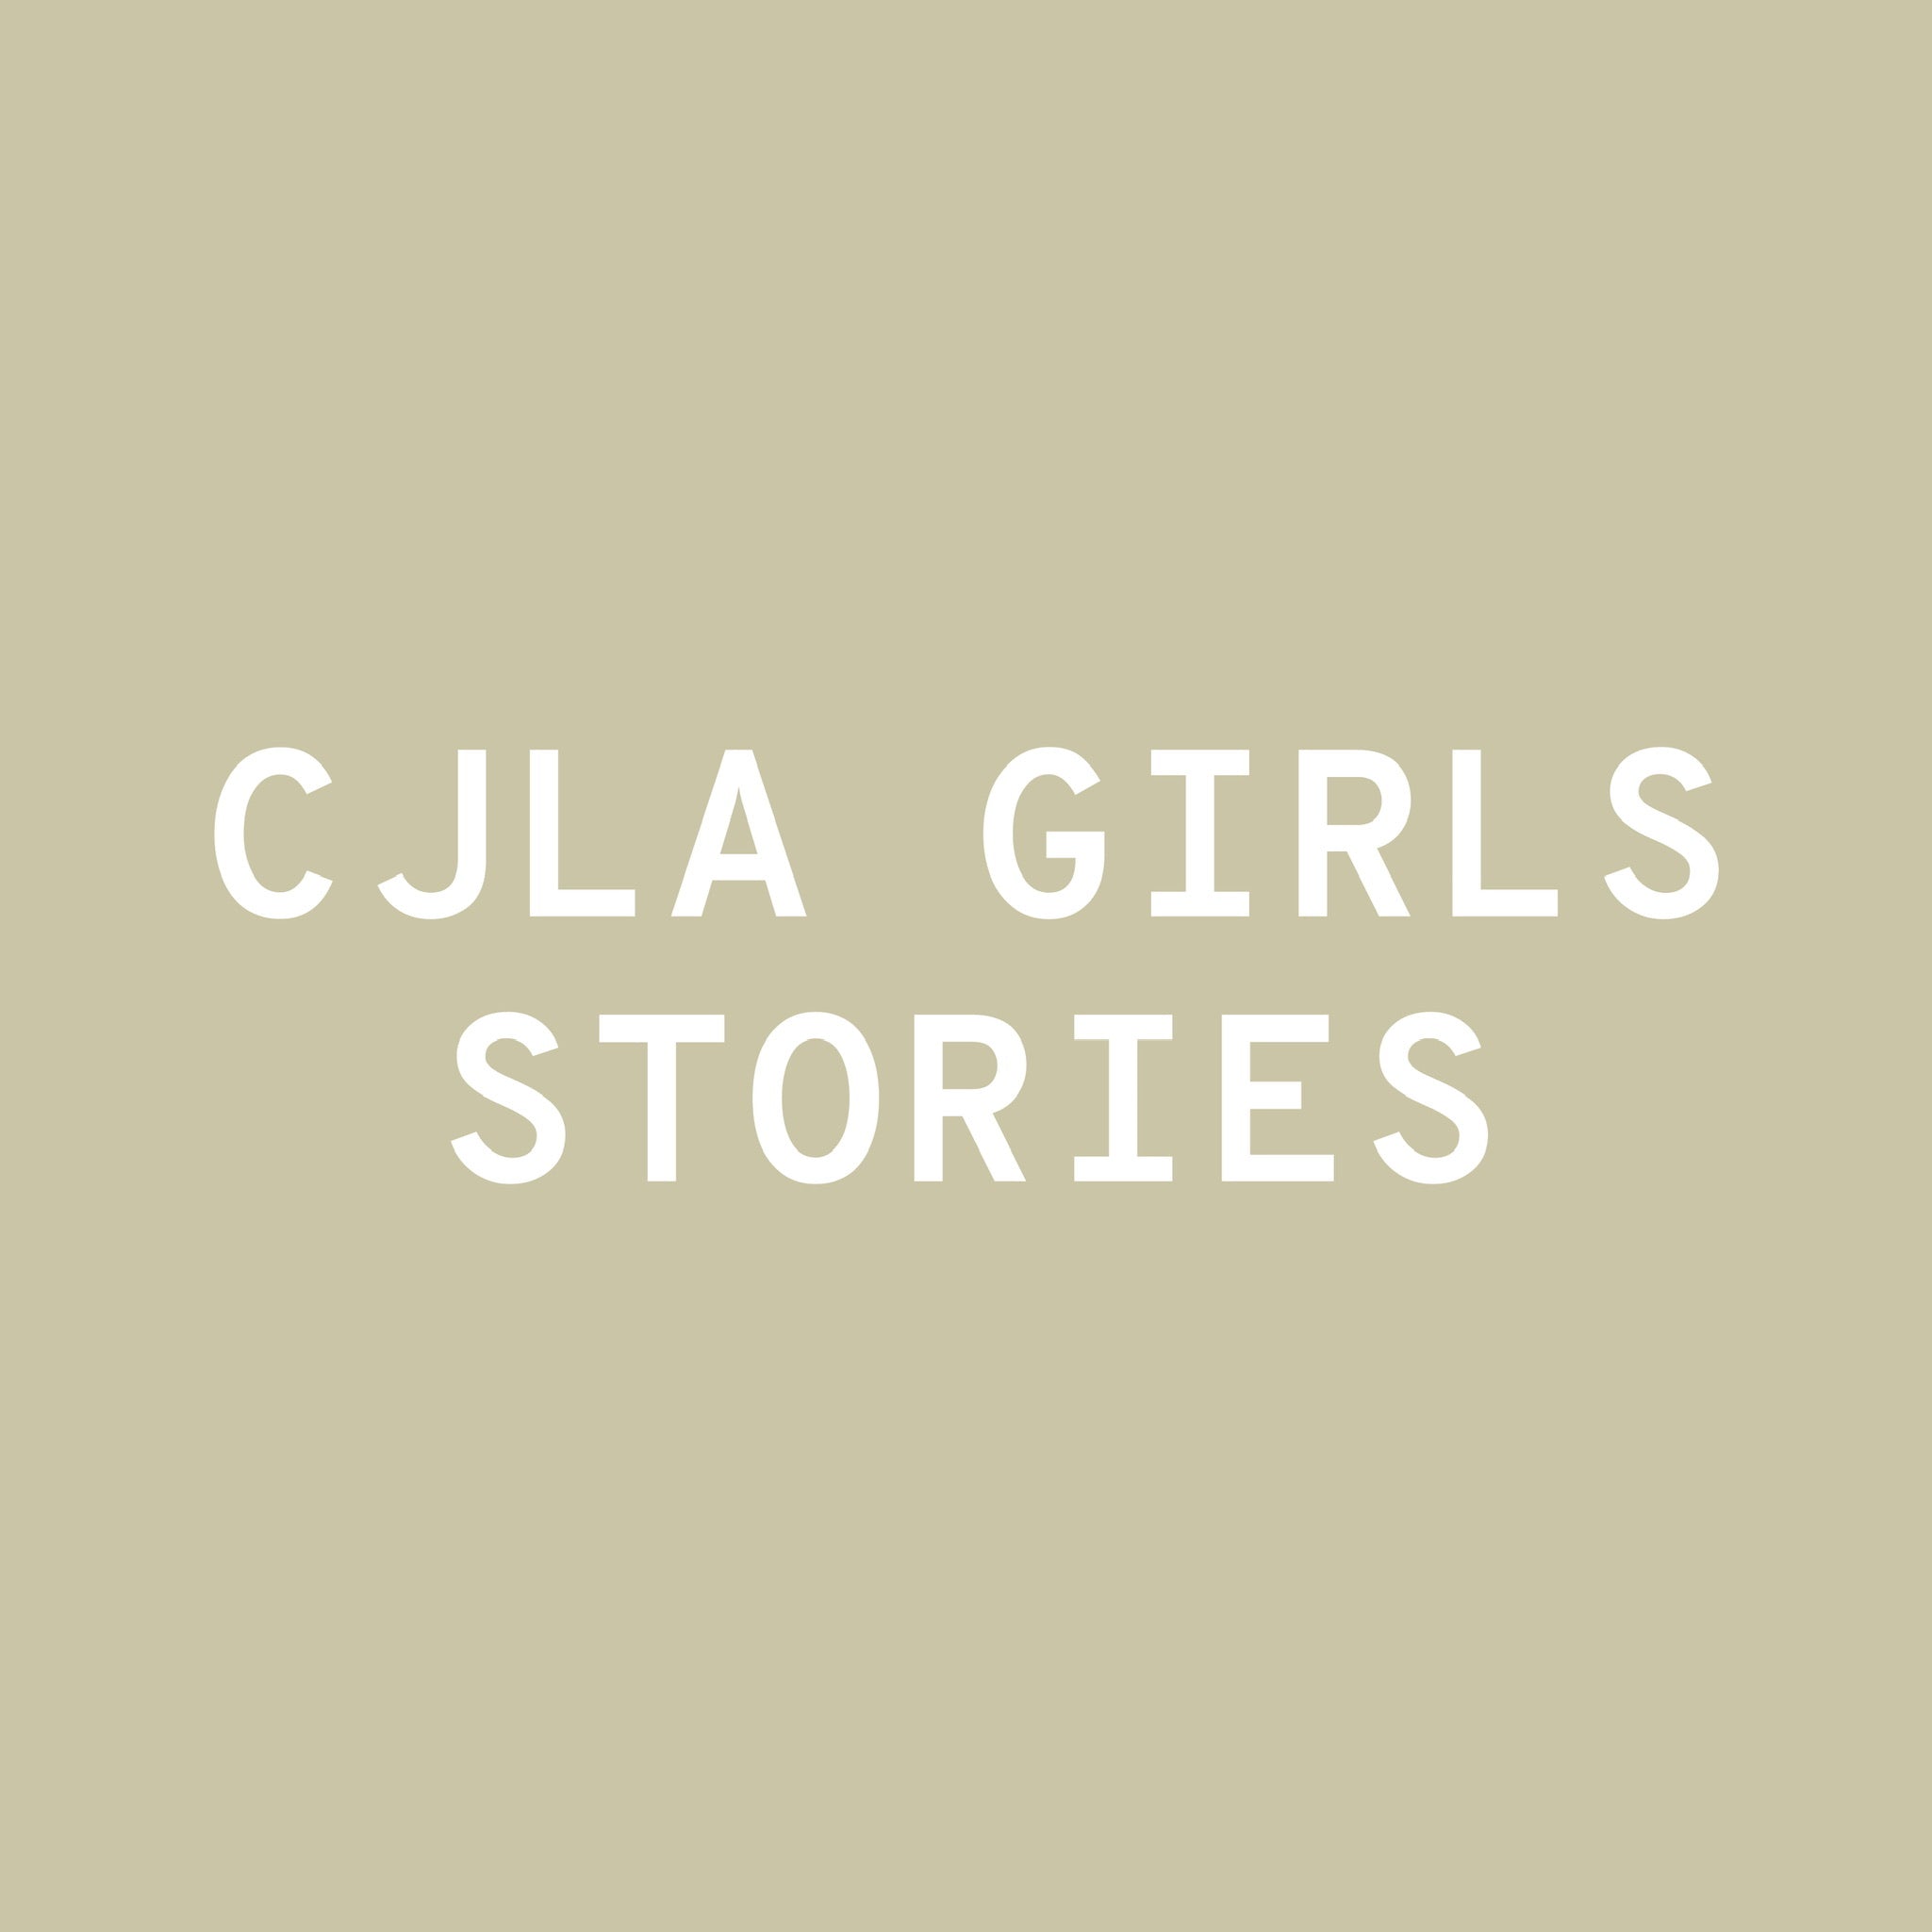 CJLA Girls Stories: Autumn Will